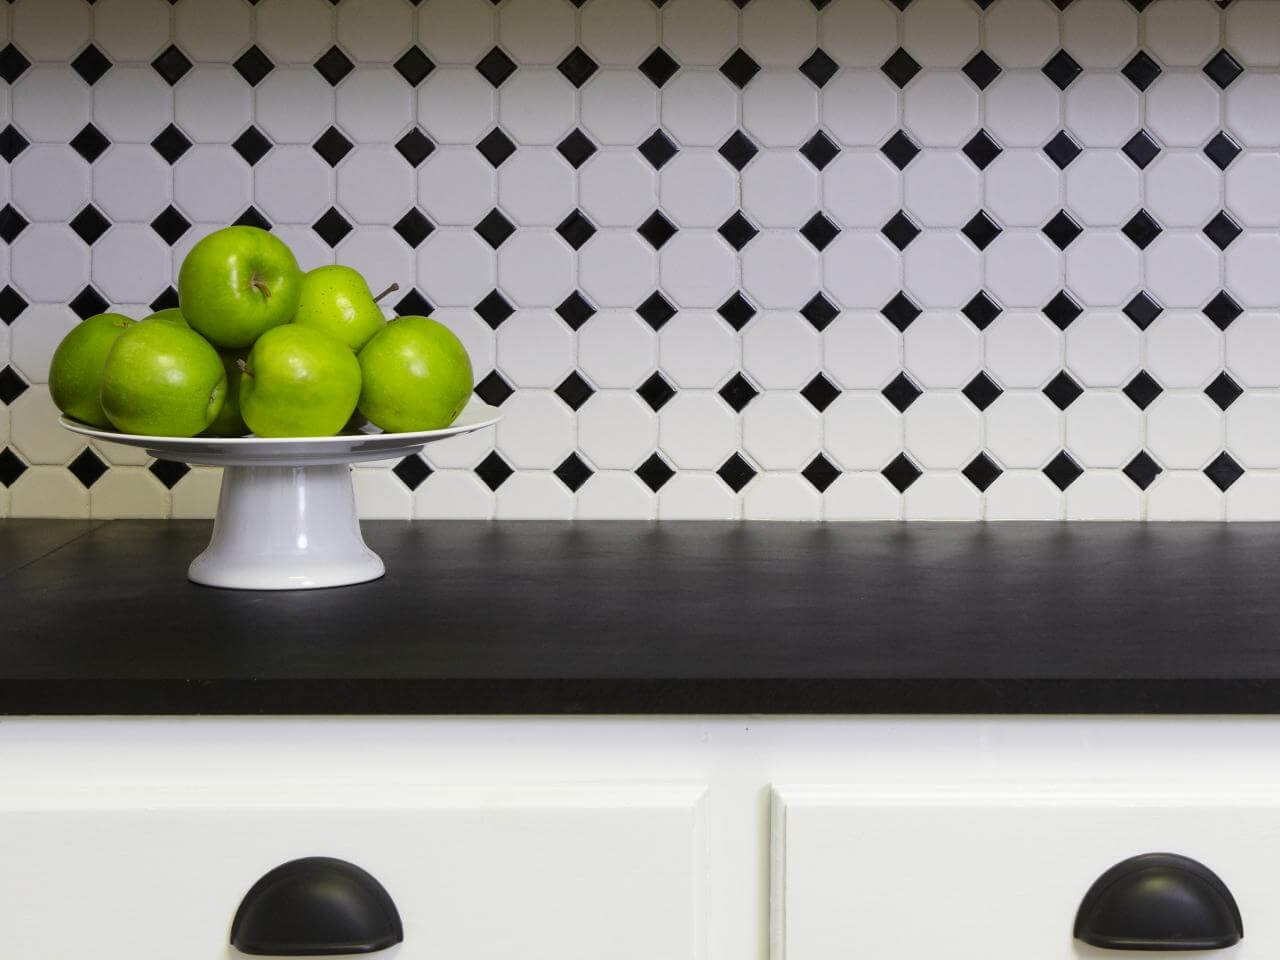 Modern kitchen splashback in black and white